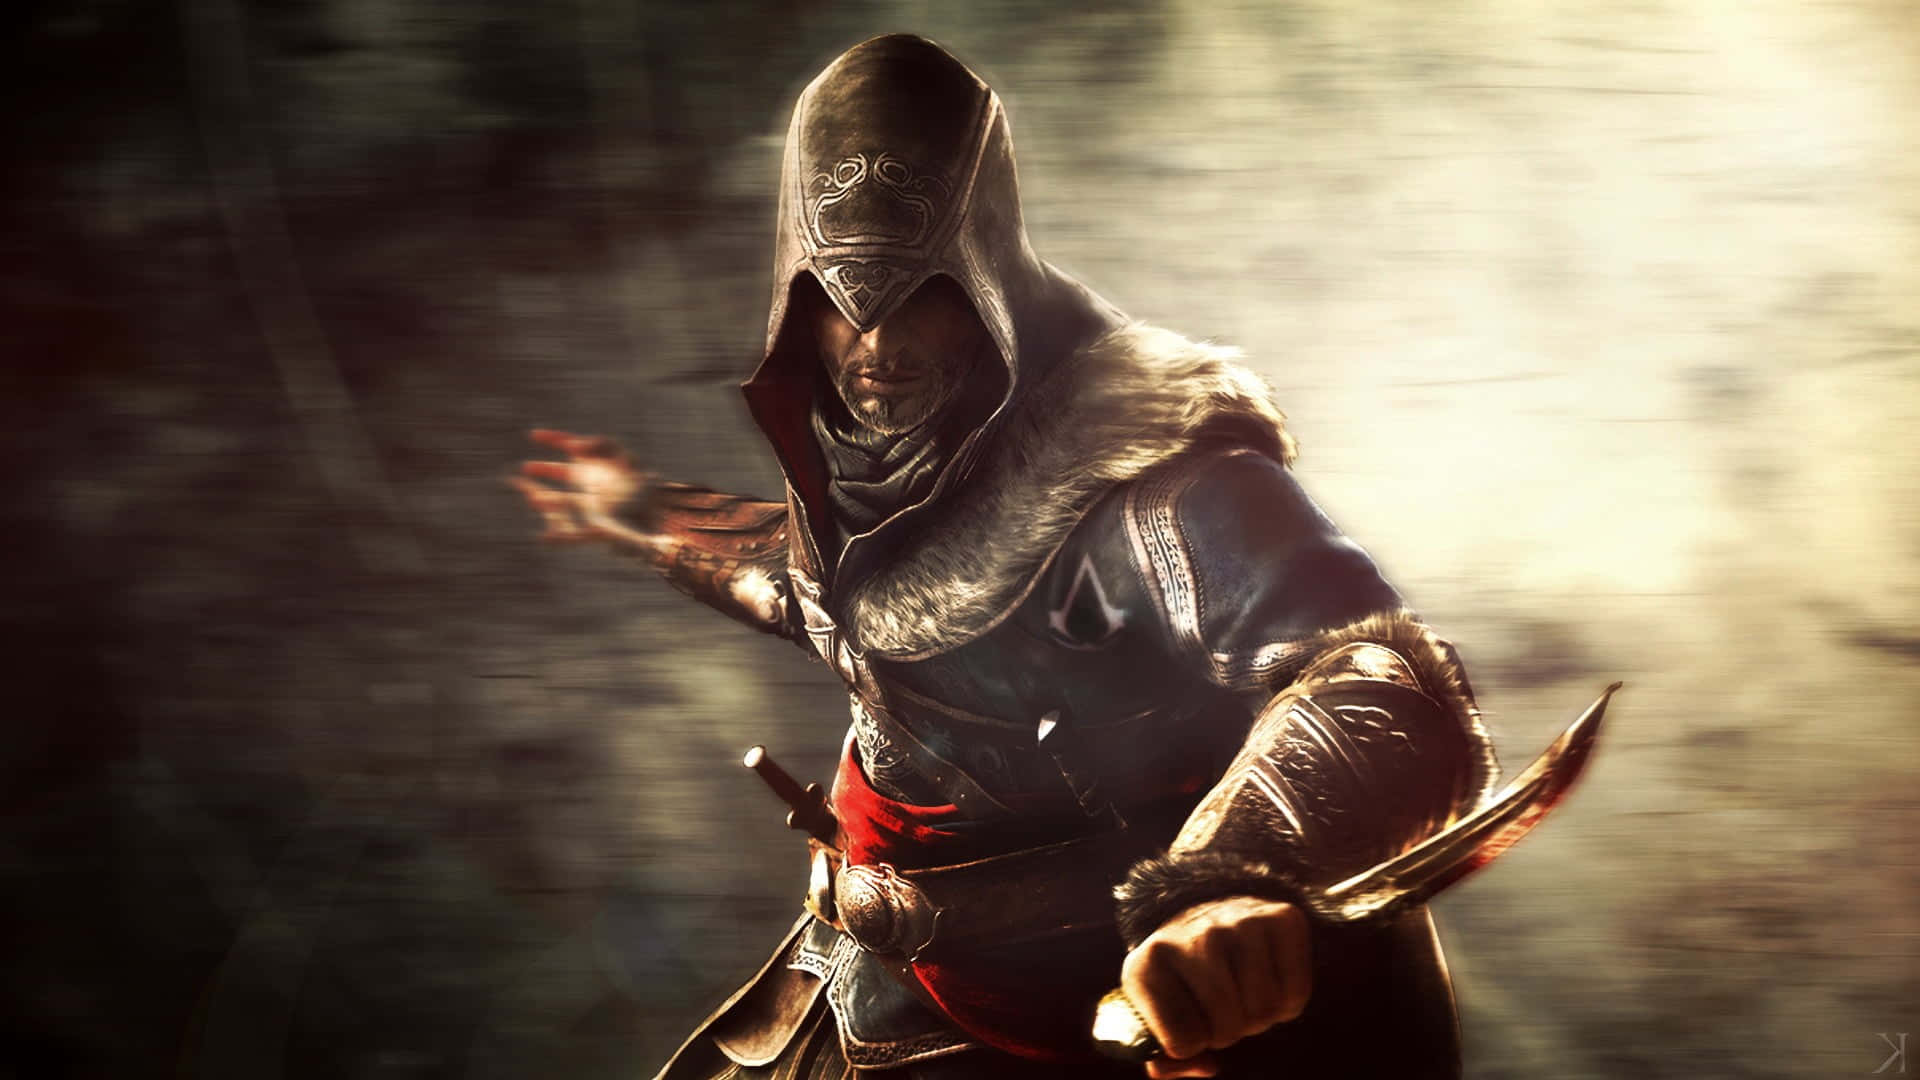 Rogue Assassin Shay Cormac in Action Wallpaper